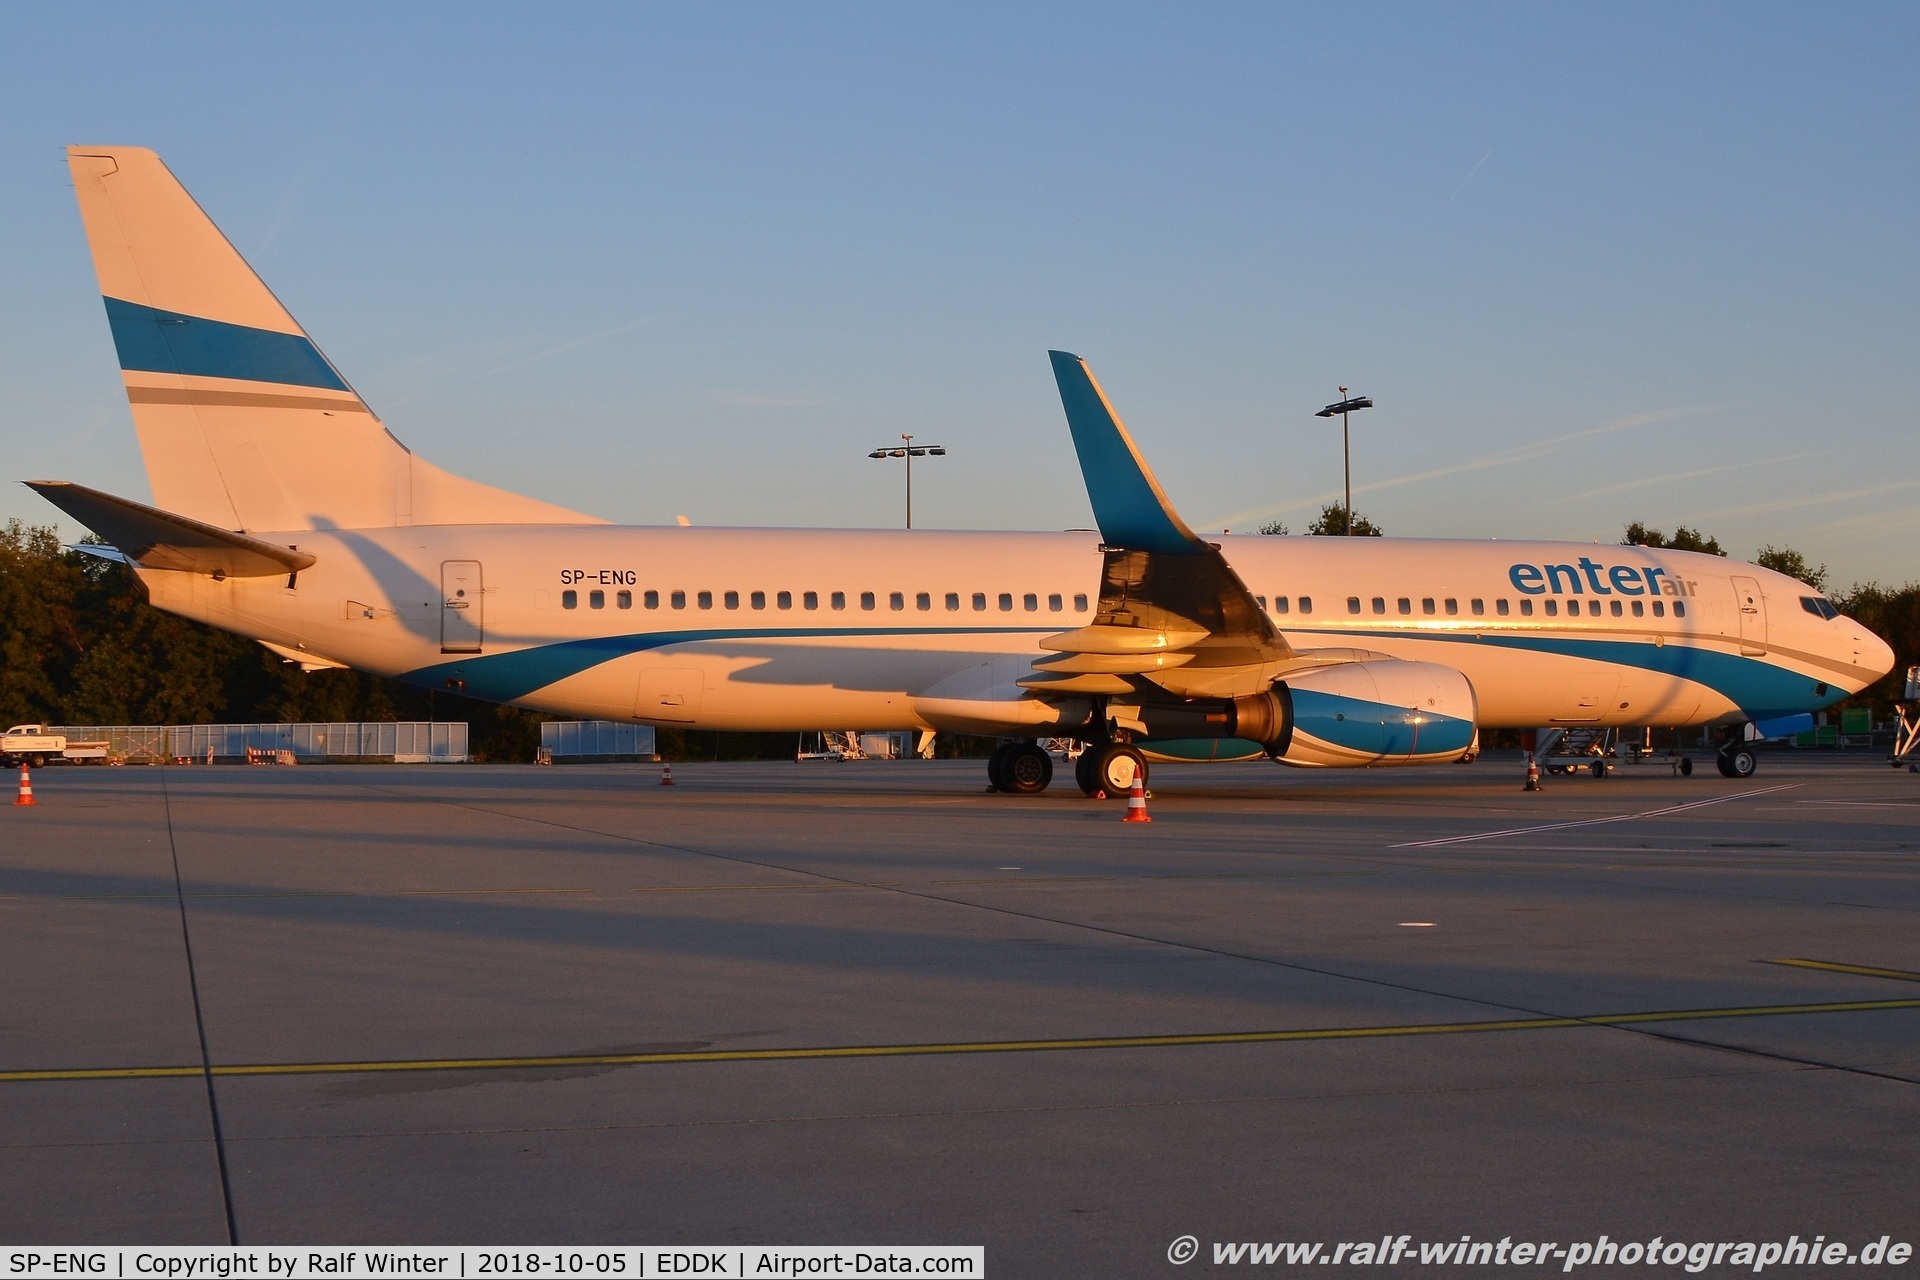 SP-ENG, 2002 Boeing 737-8CX C/N 32365, Boeing 737-8CX(W) - E4 ENT Enter Air - 32365 - SP-ENG - 05.10.2018 - CGN